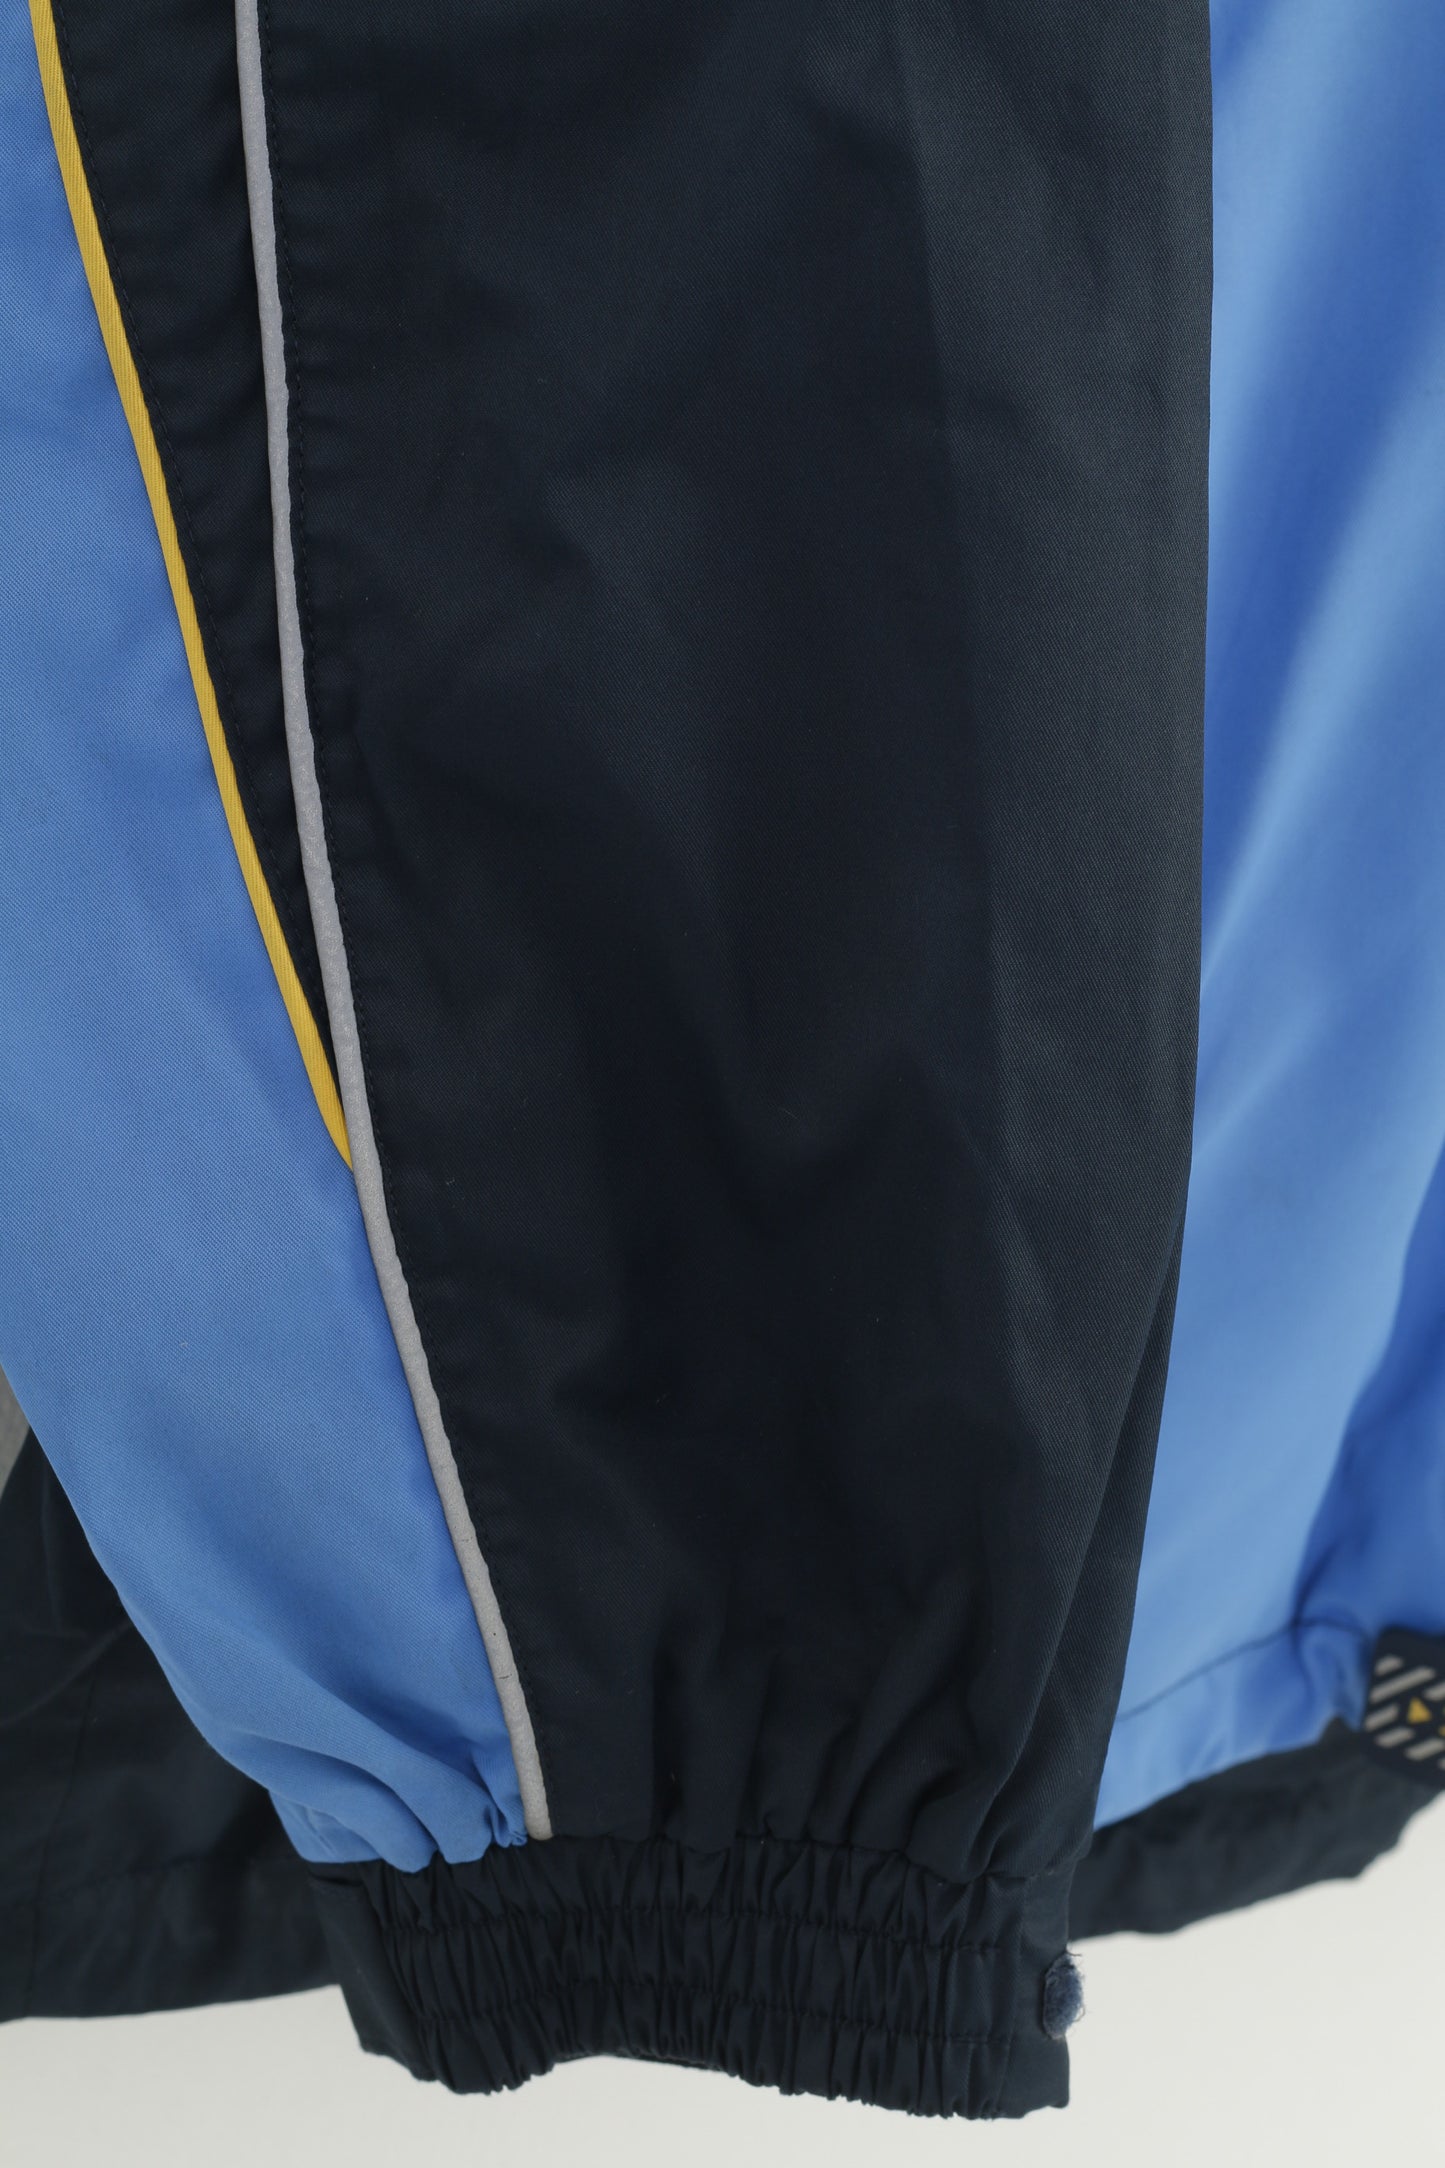 Tcm Secret Protest Boys 146 152 Jacket Lightweight Outdoor Full Zipper Navy Hooded Blue Vintage Sport Top